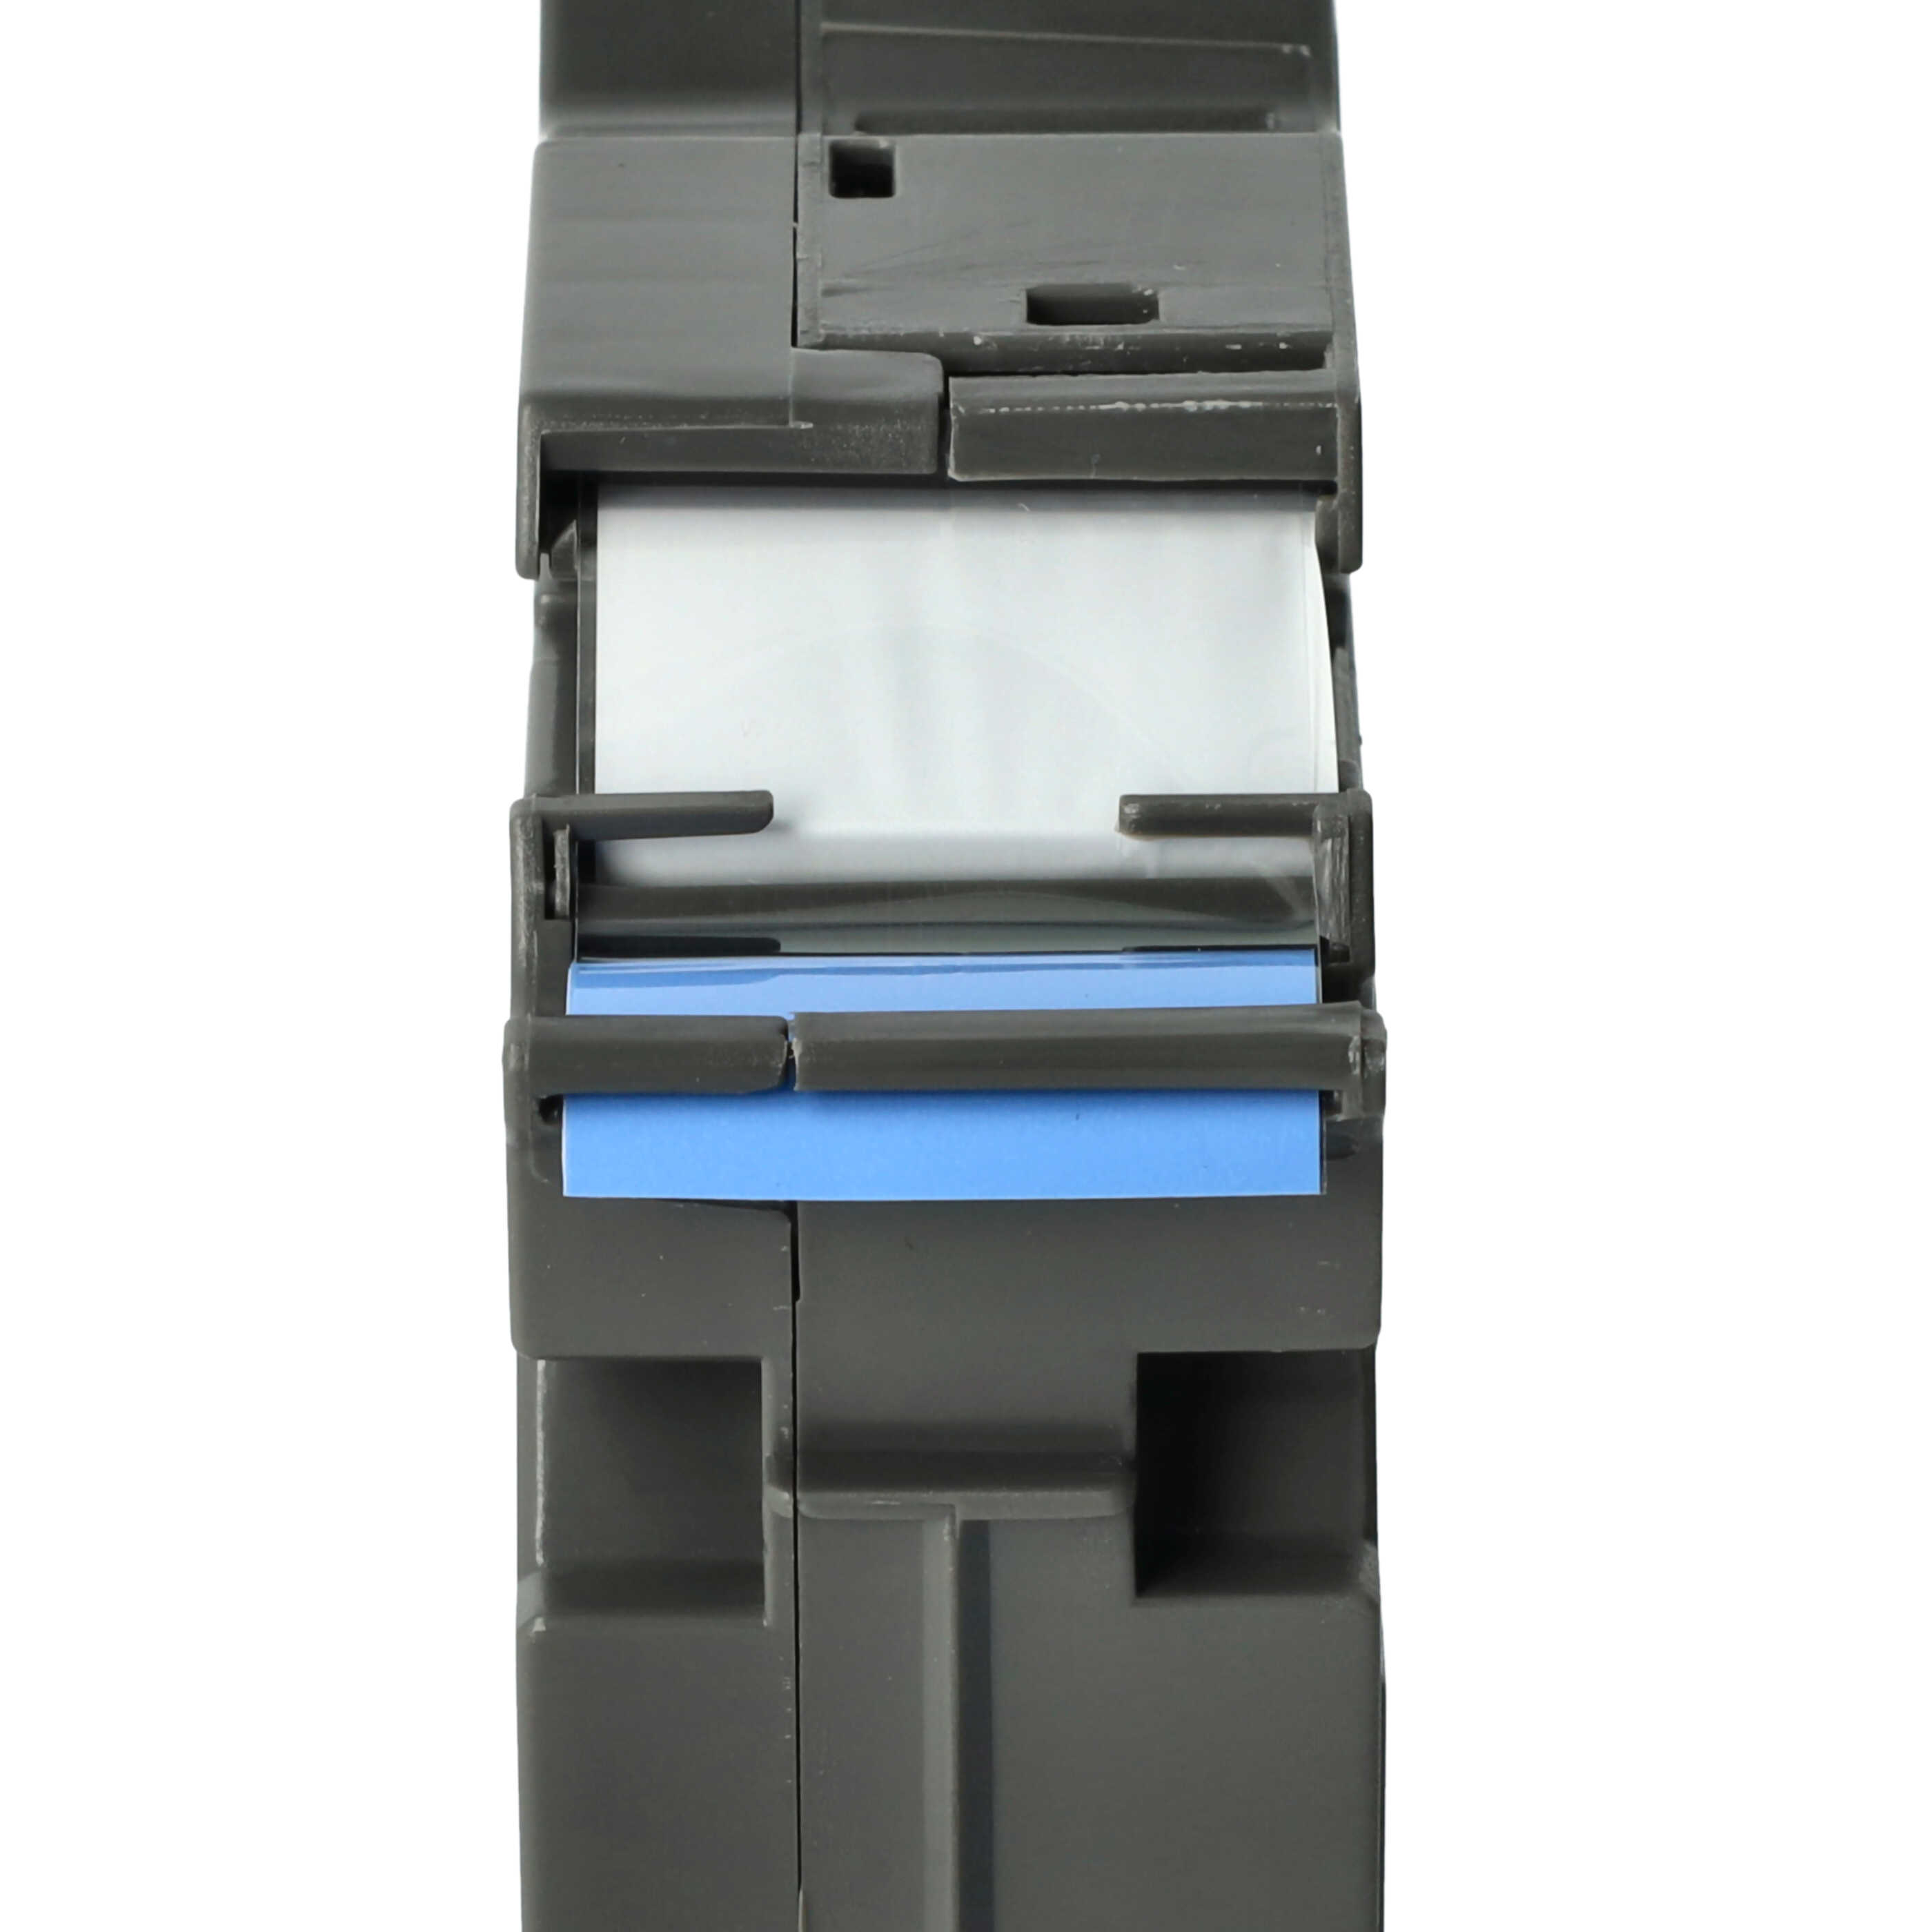 Casete cinta escritura reemplaza Brother TZE-555, TZ-555 Blanco su Azul